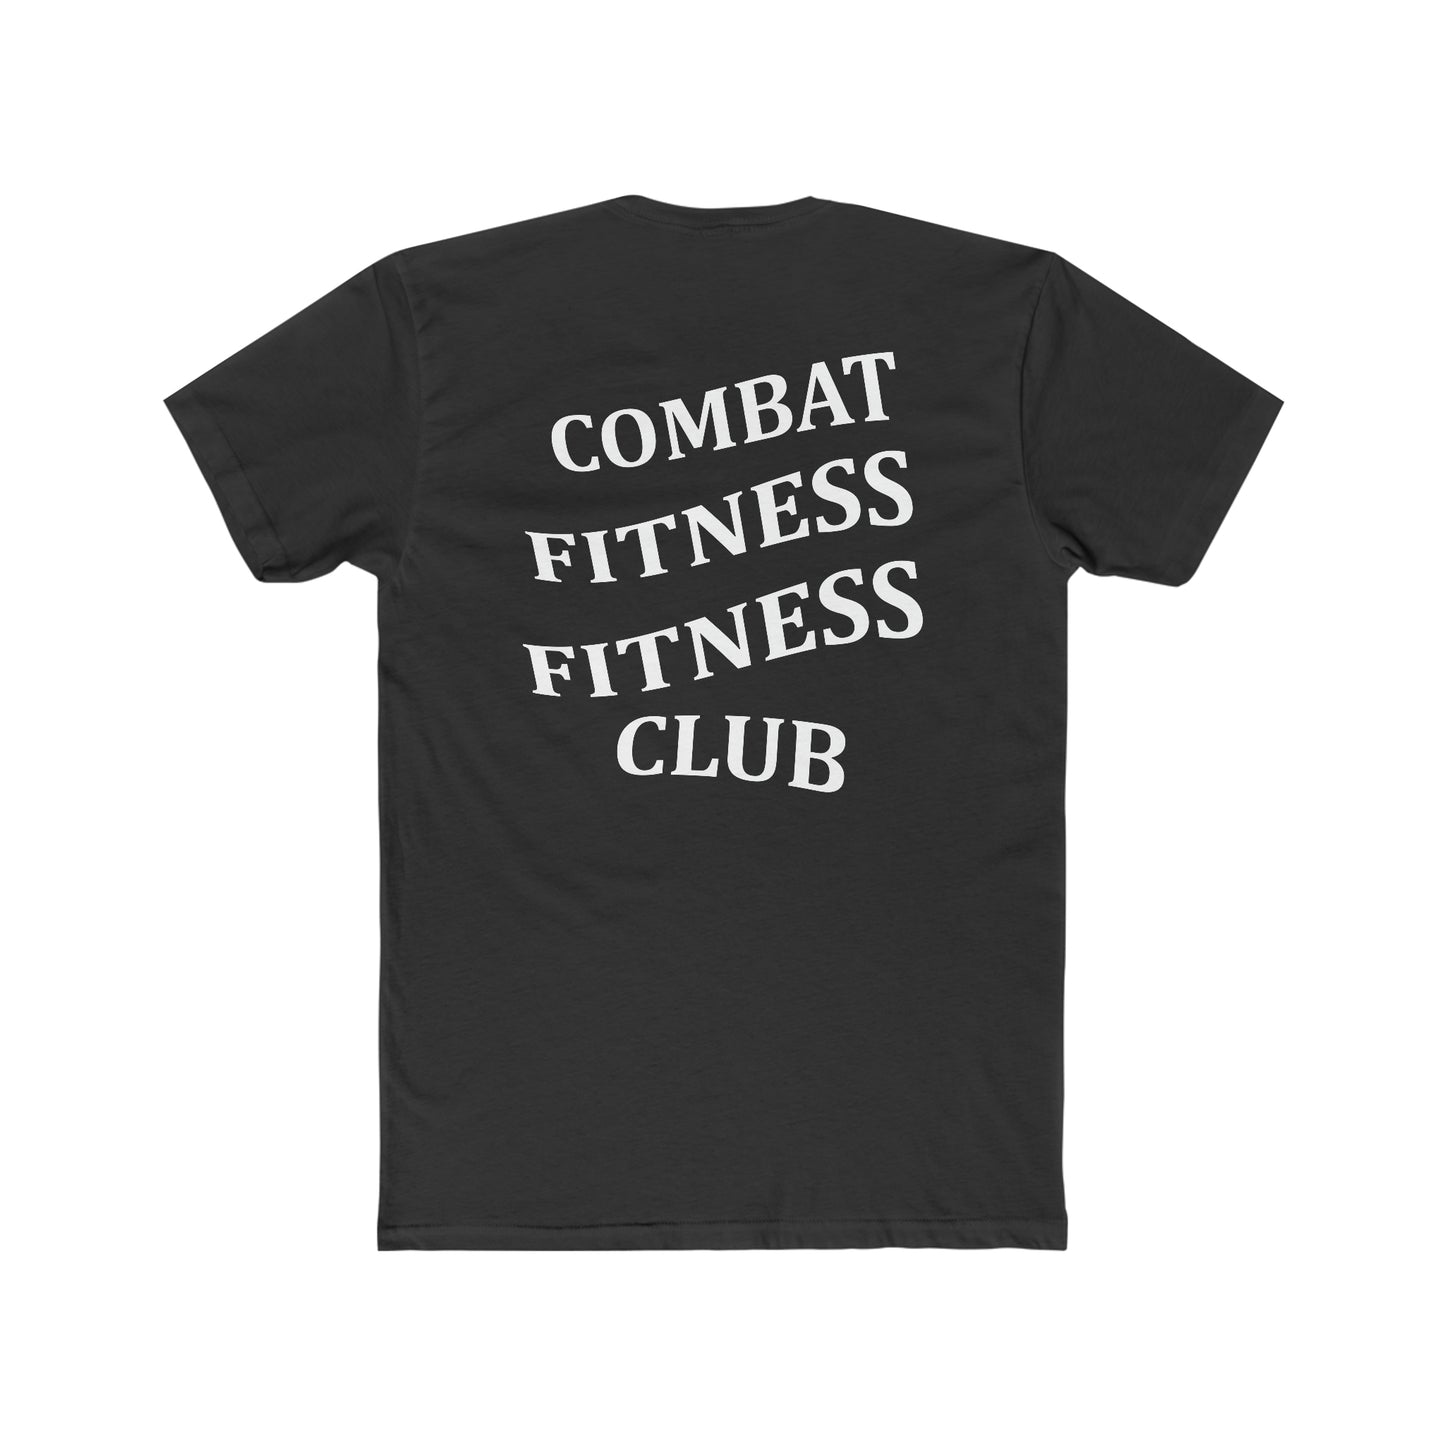 "Combat Fitness Fitness Club" Tee